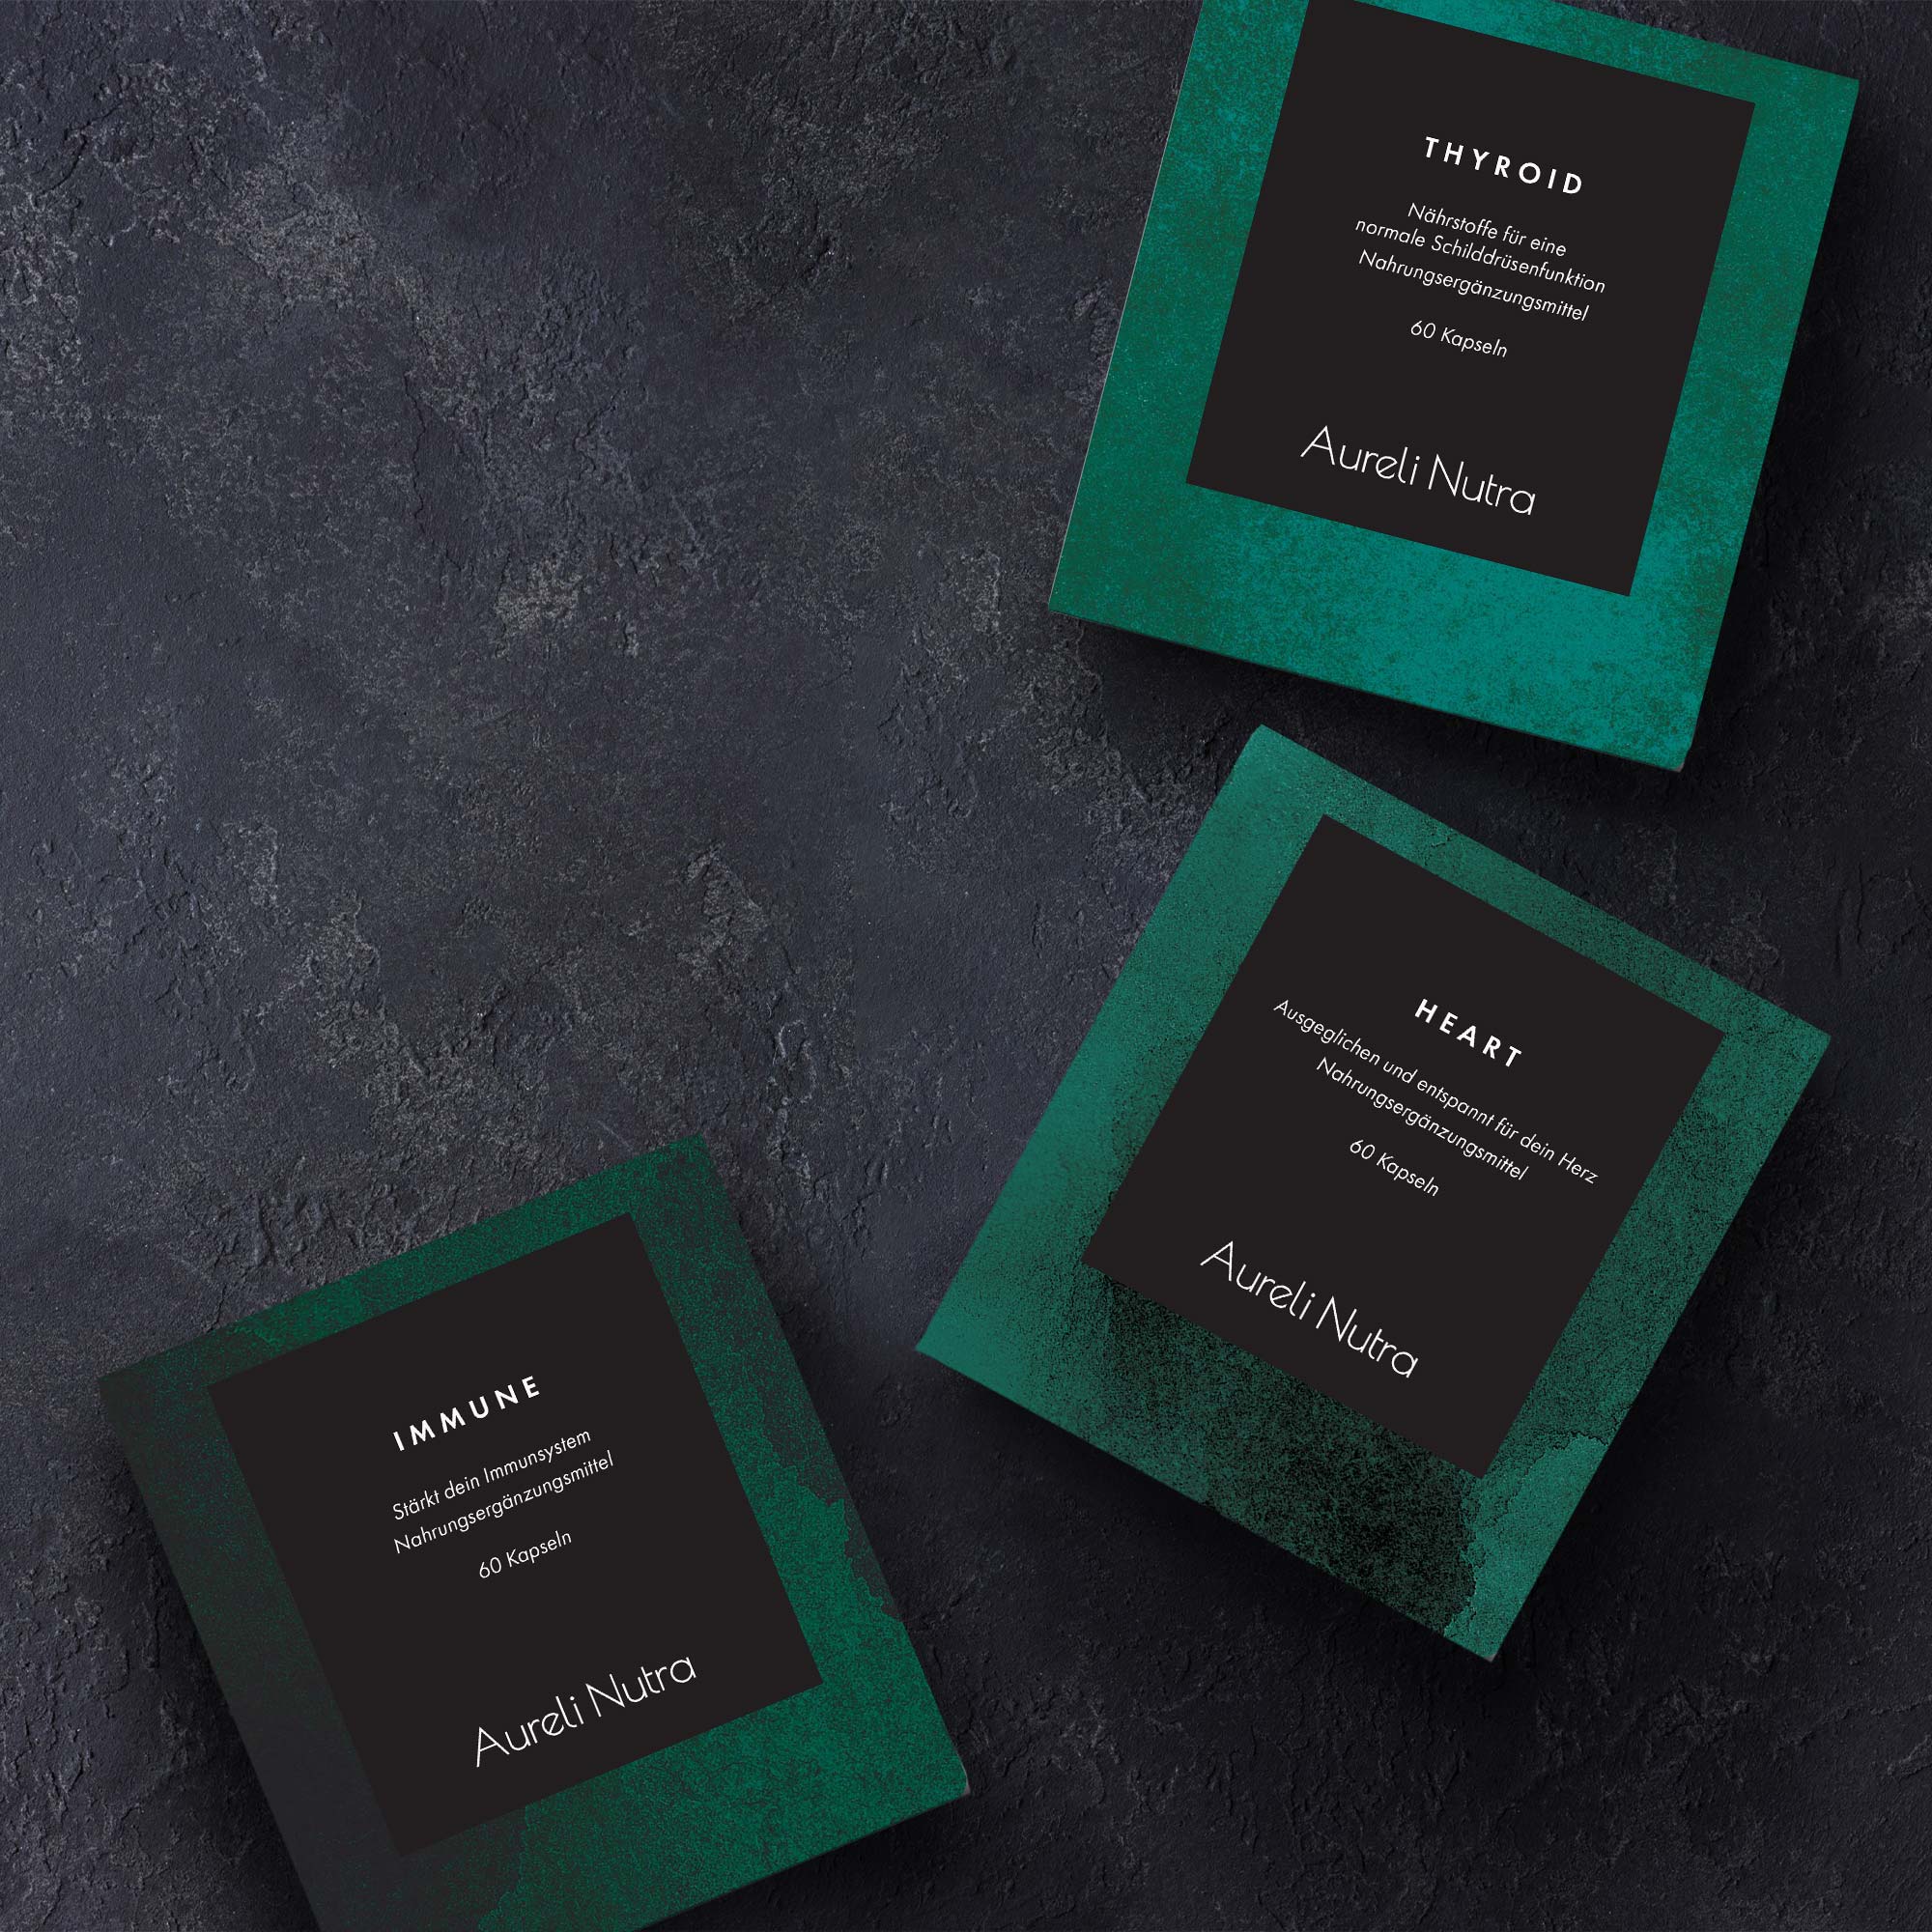 karolina krol studio aureli nutra natural health beauty supplements minimalist stylish illustrated packaging design